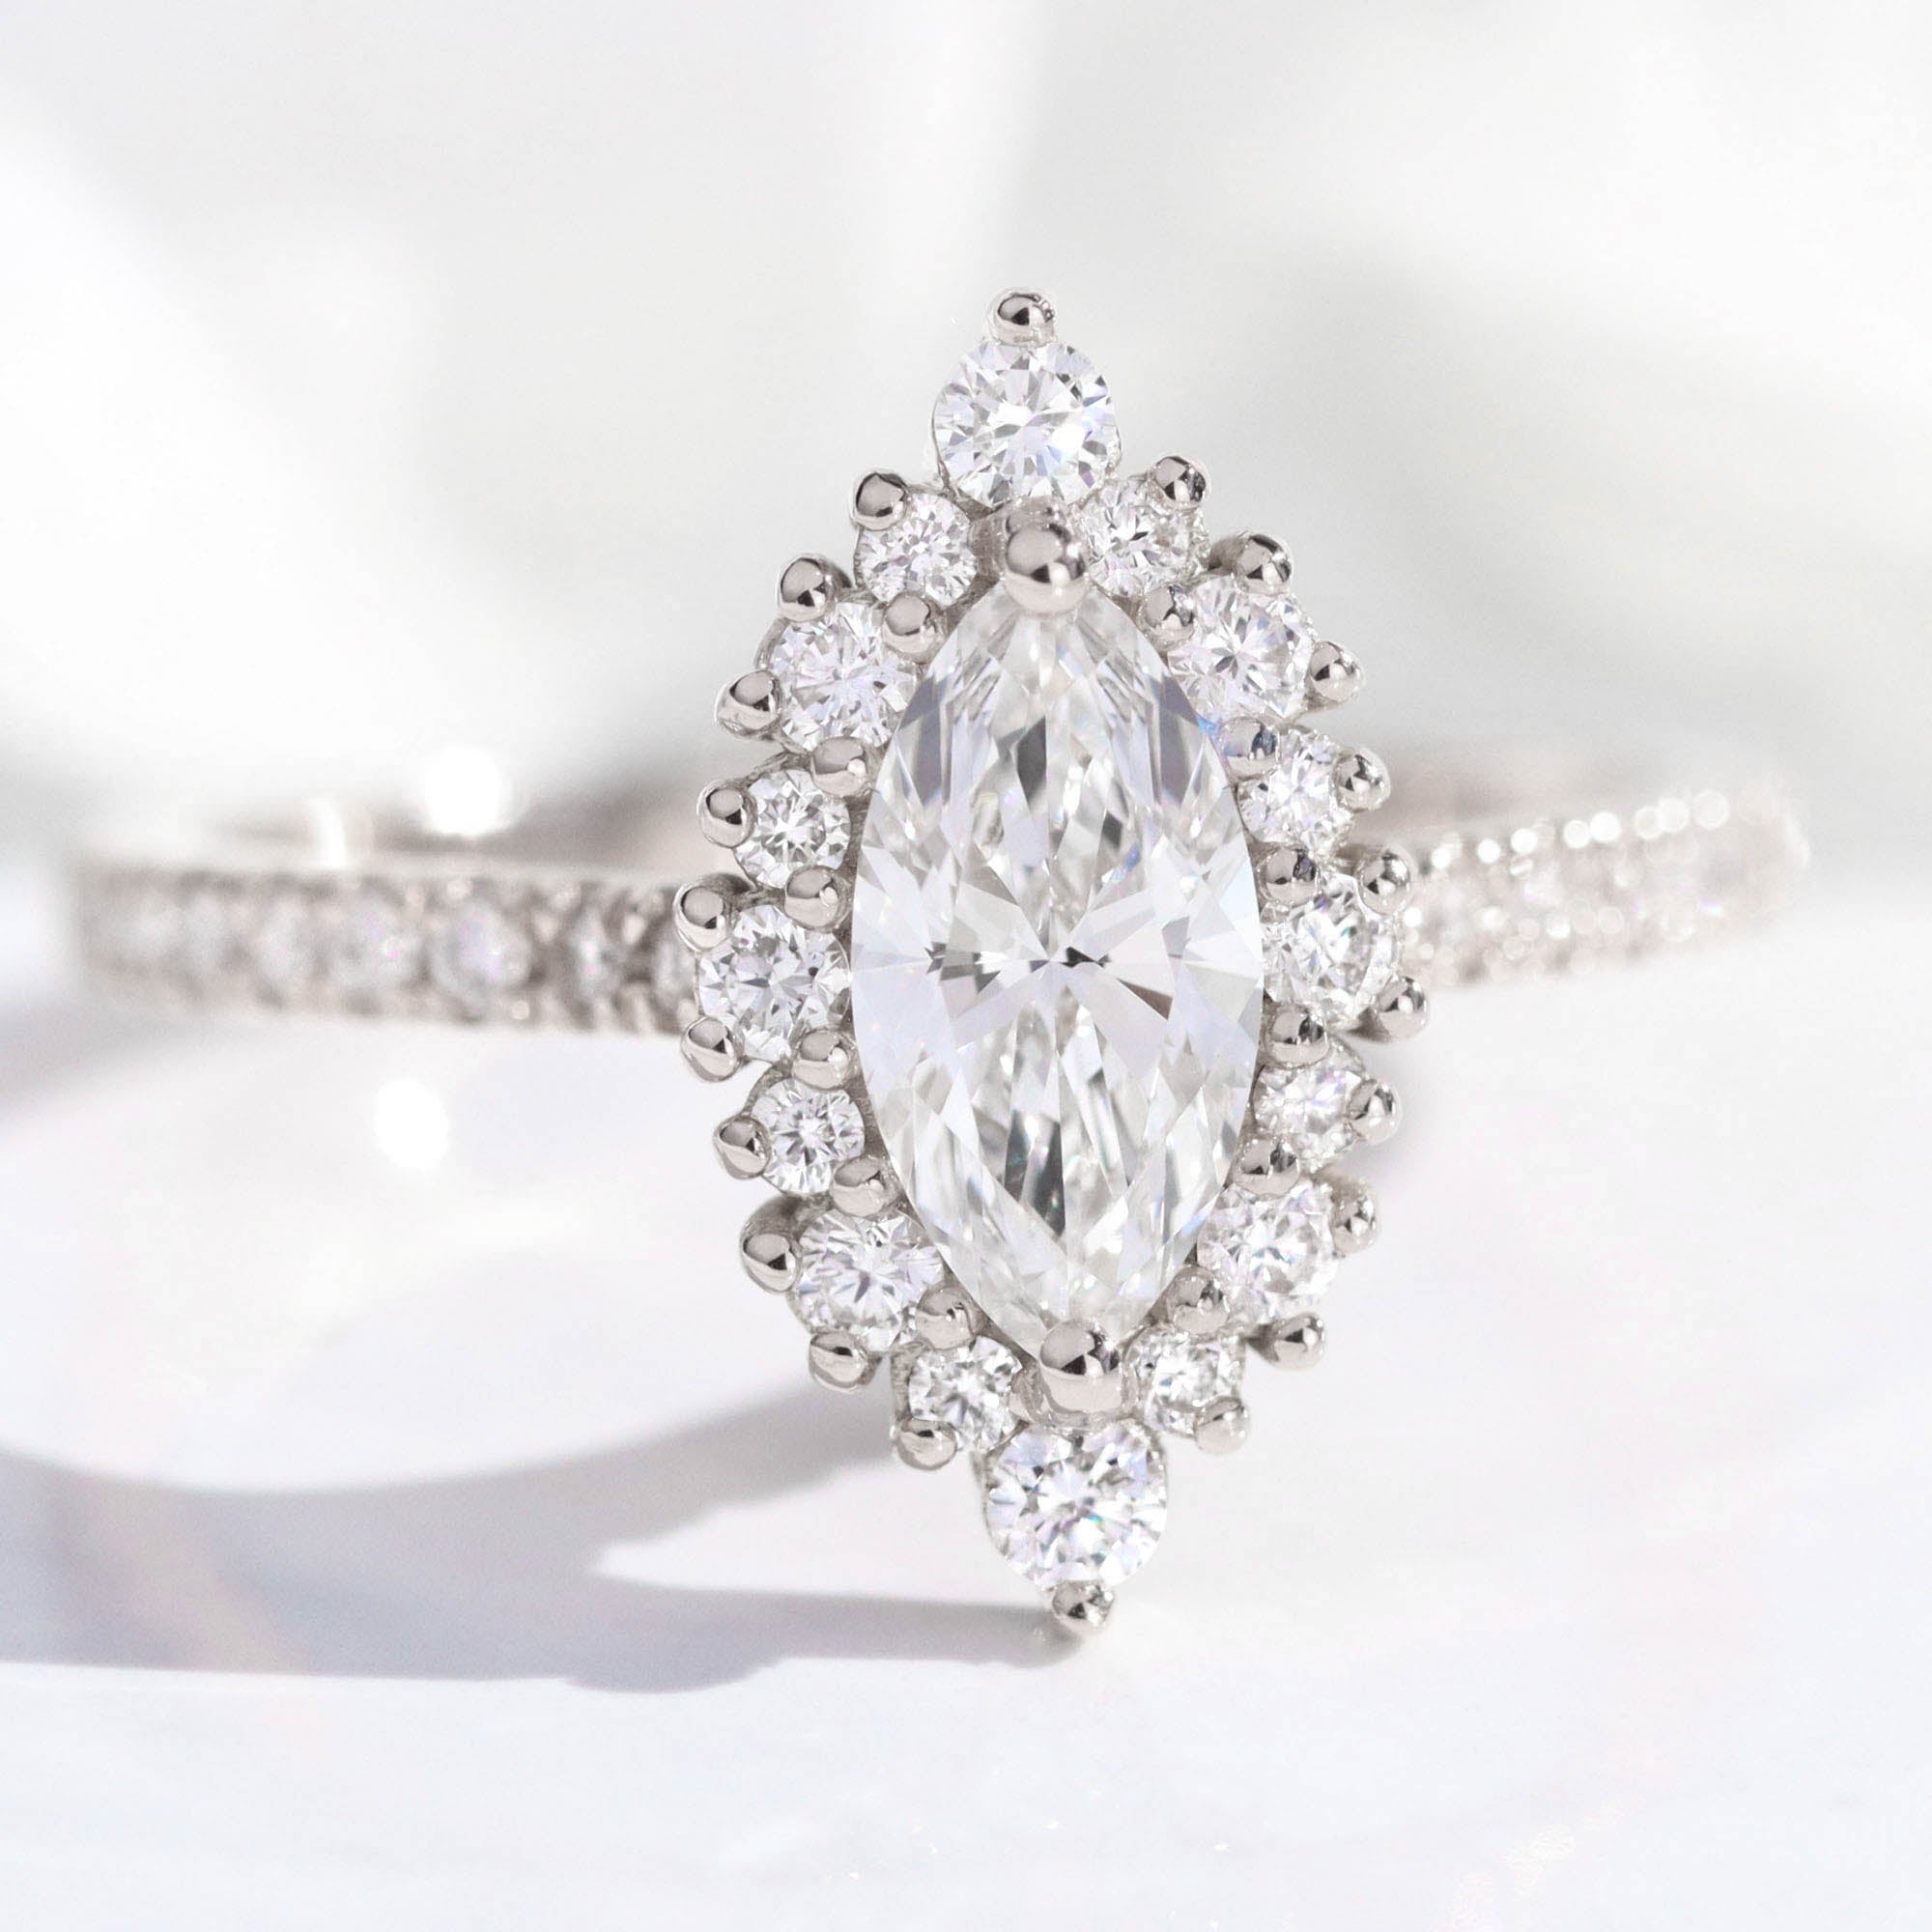 lab diamond ring white gold marquise diamond halo engagement ring La More Design Jewelry